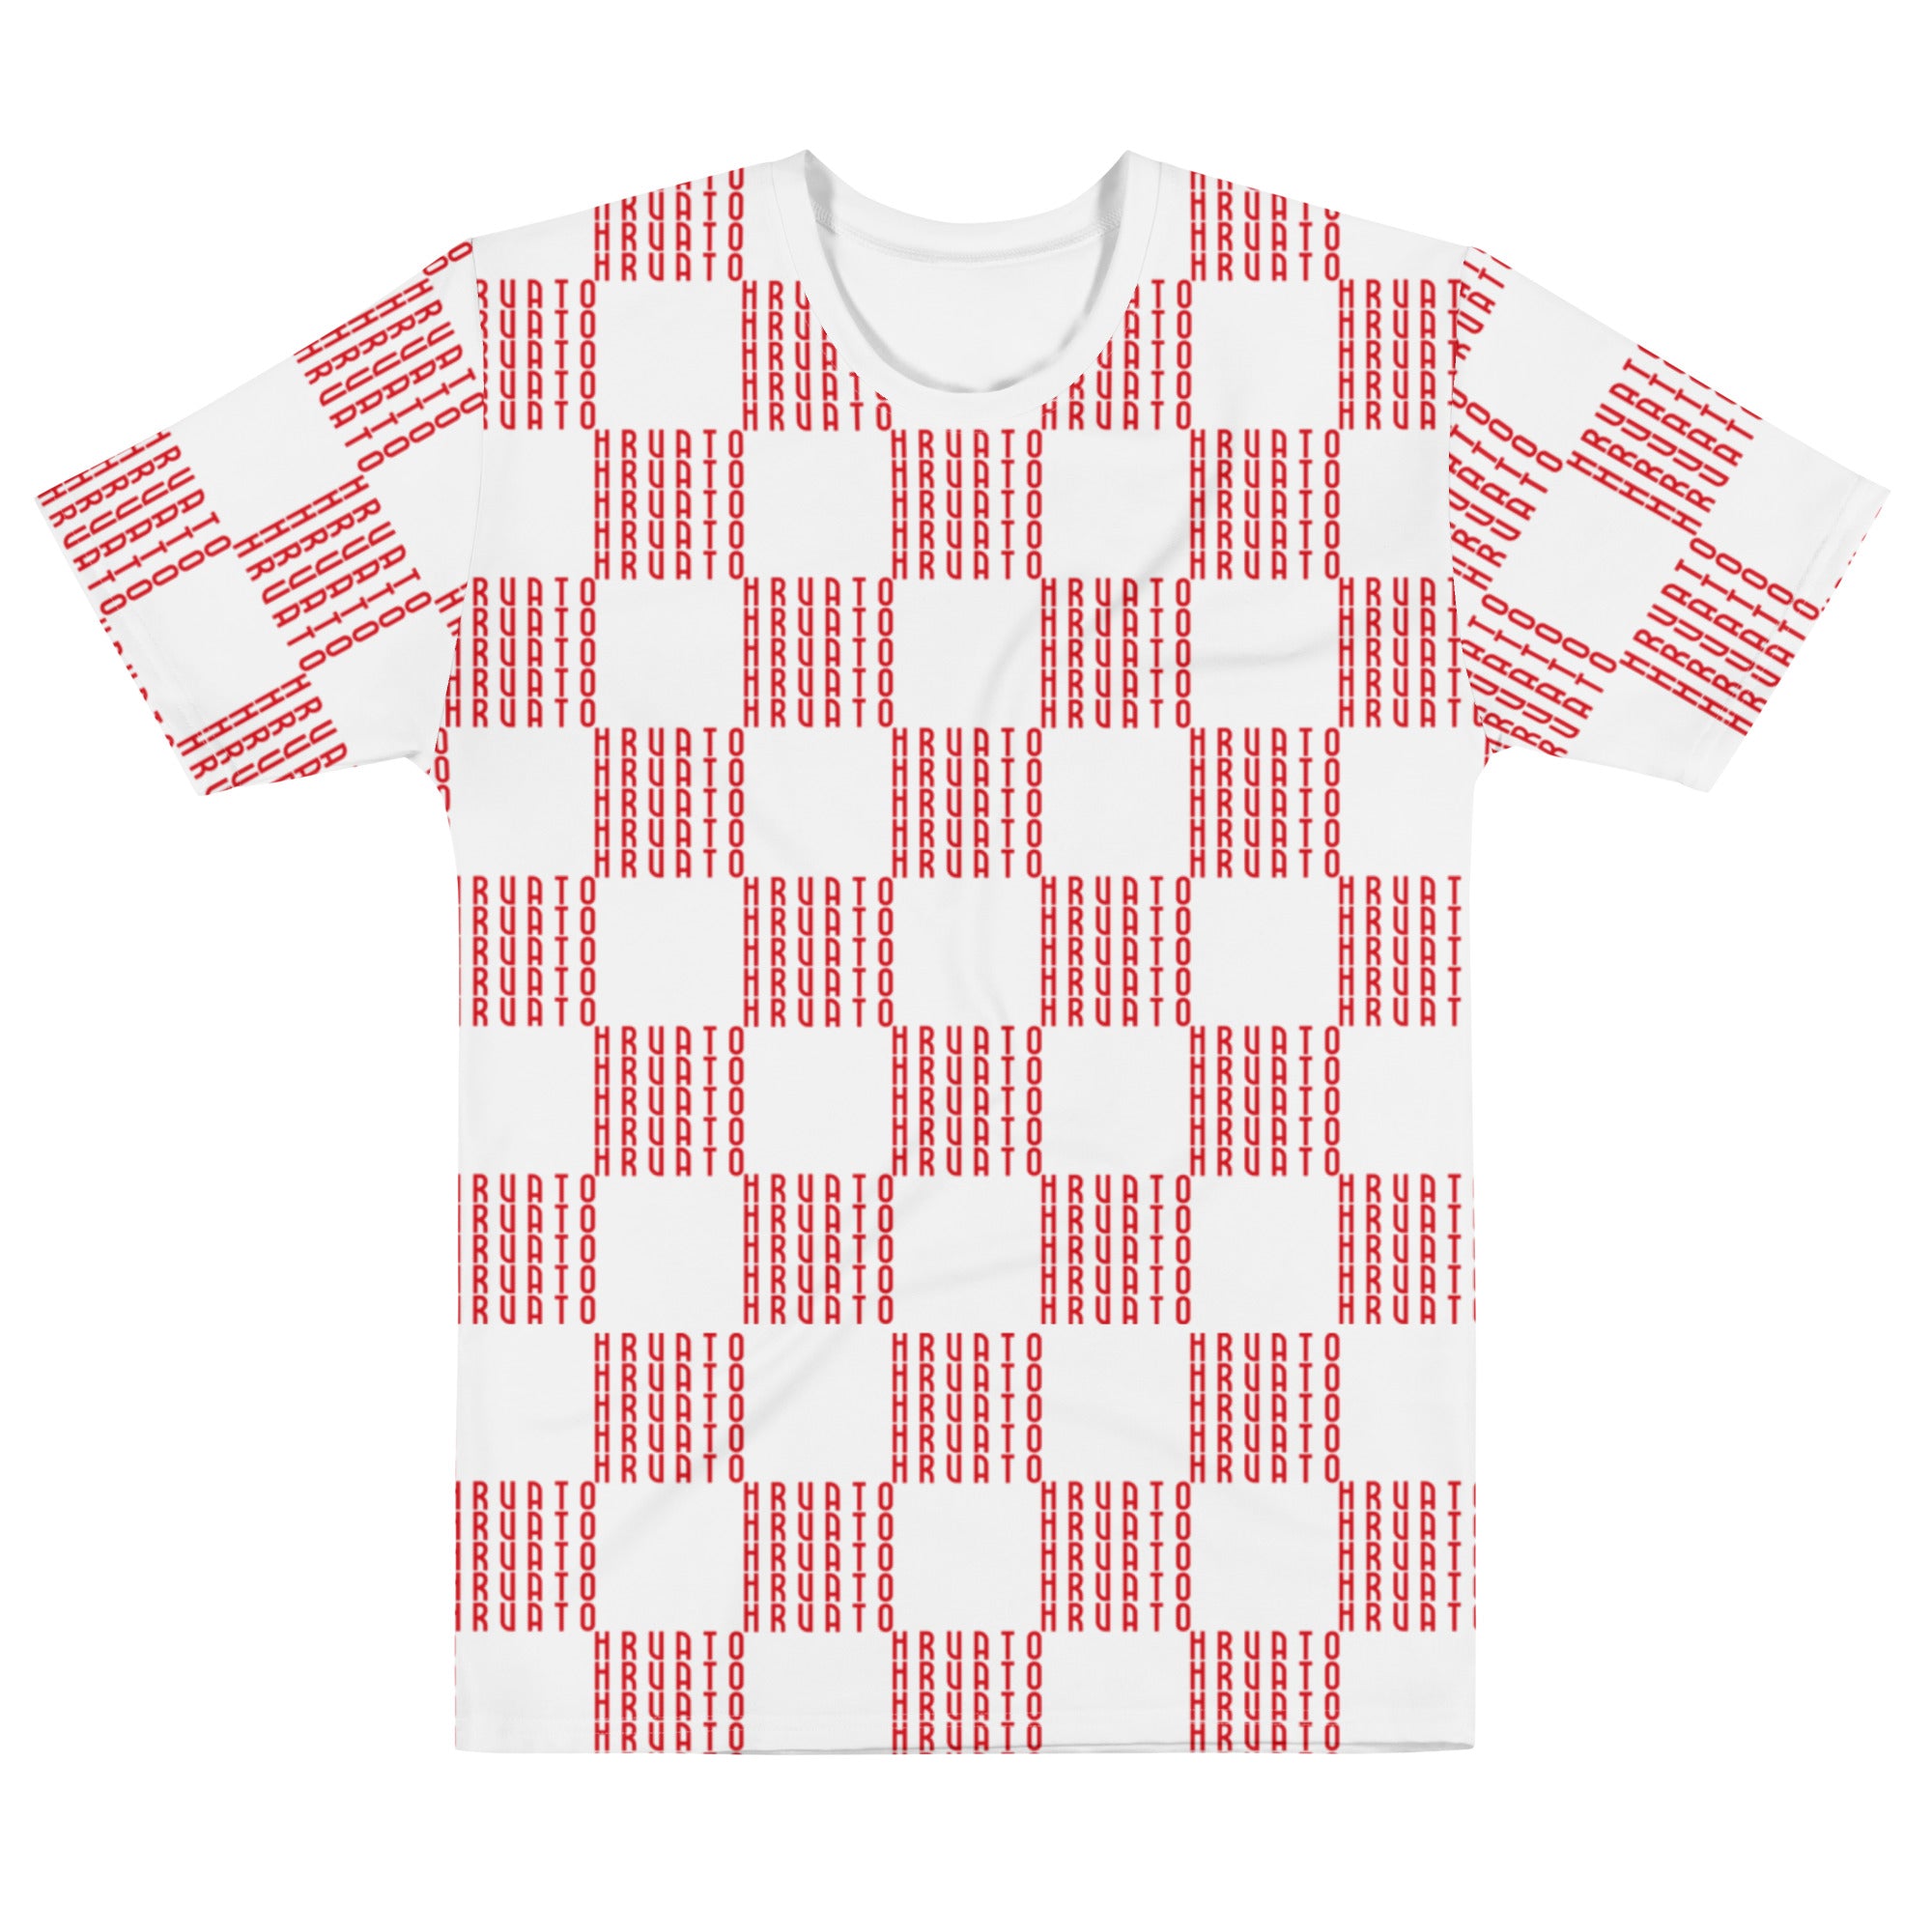 Šahovnica Men's White T-Shirt - Traditional Croatian Design